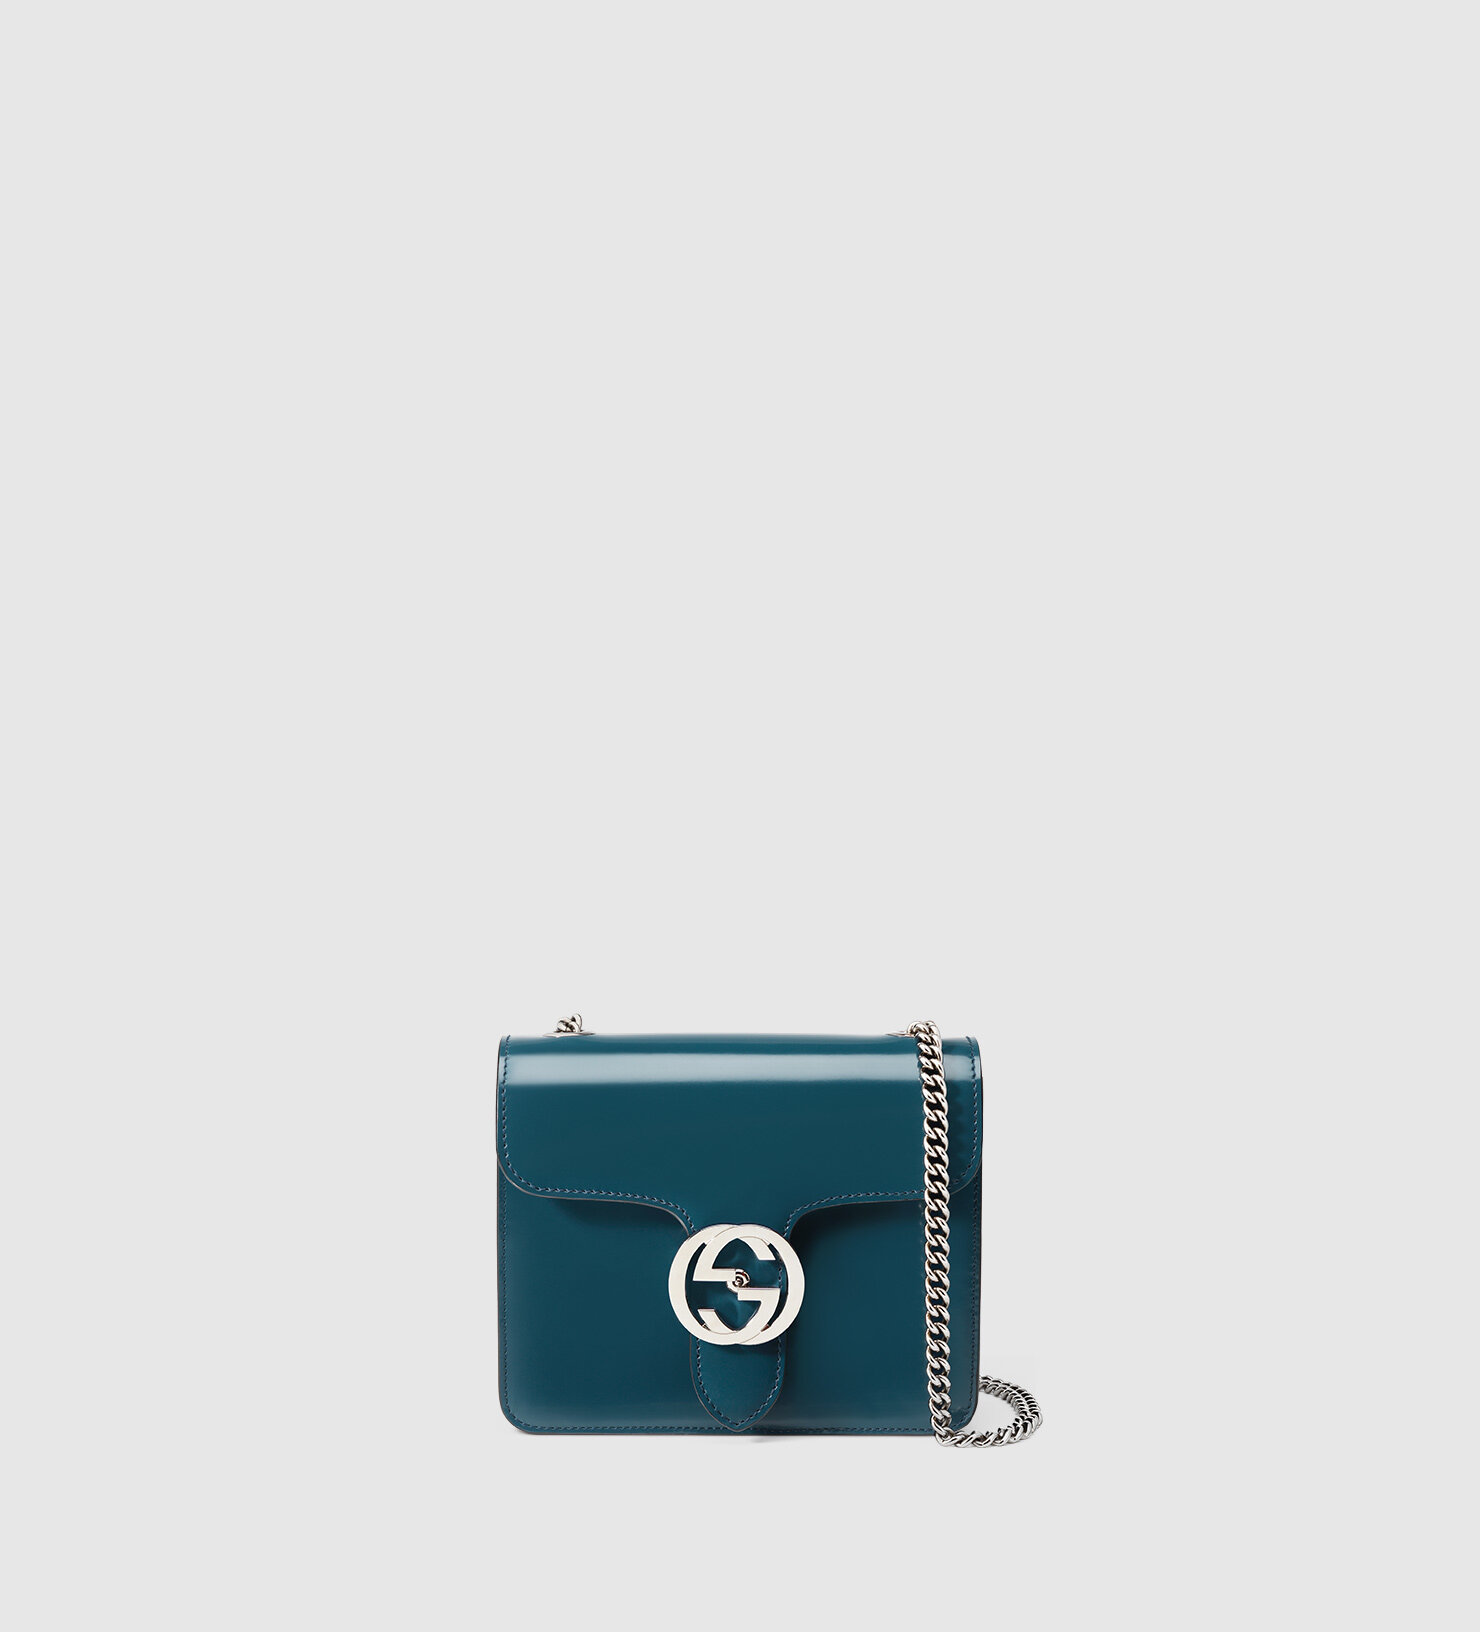 Gucci Small Interlocking Shoulder Bag in Blue Polished Leather